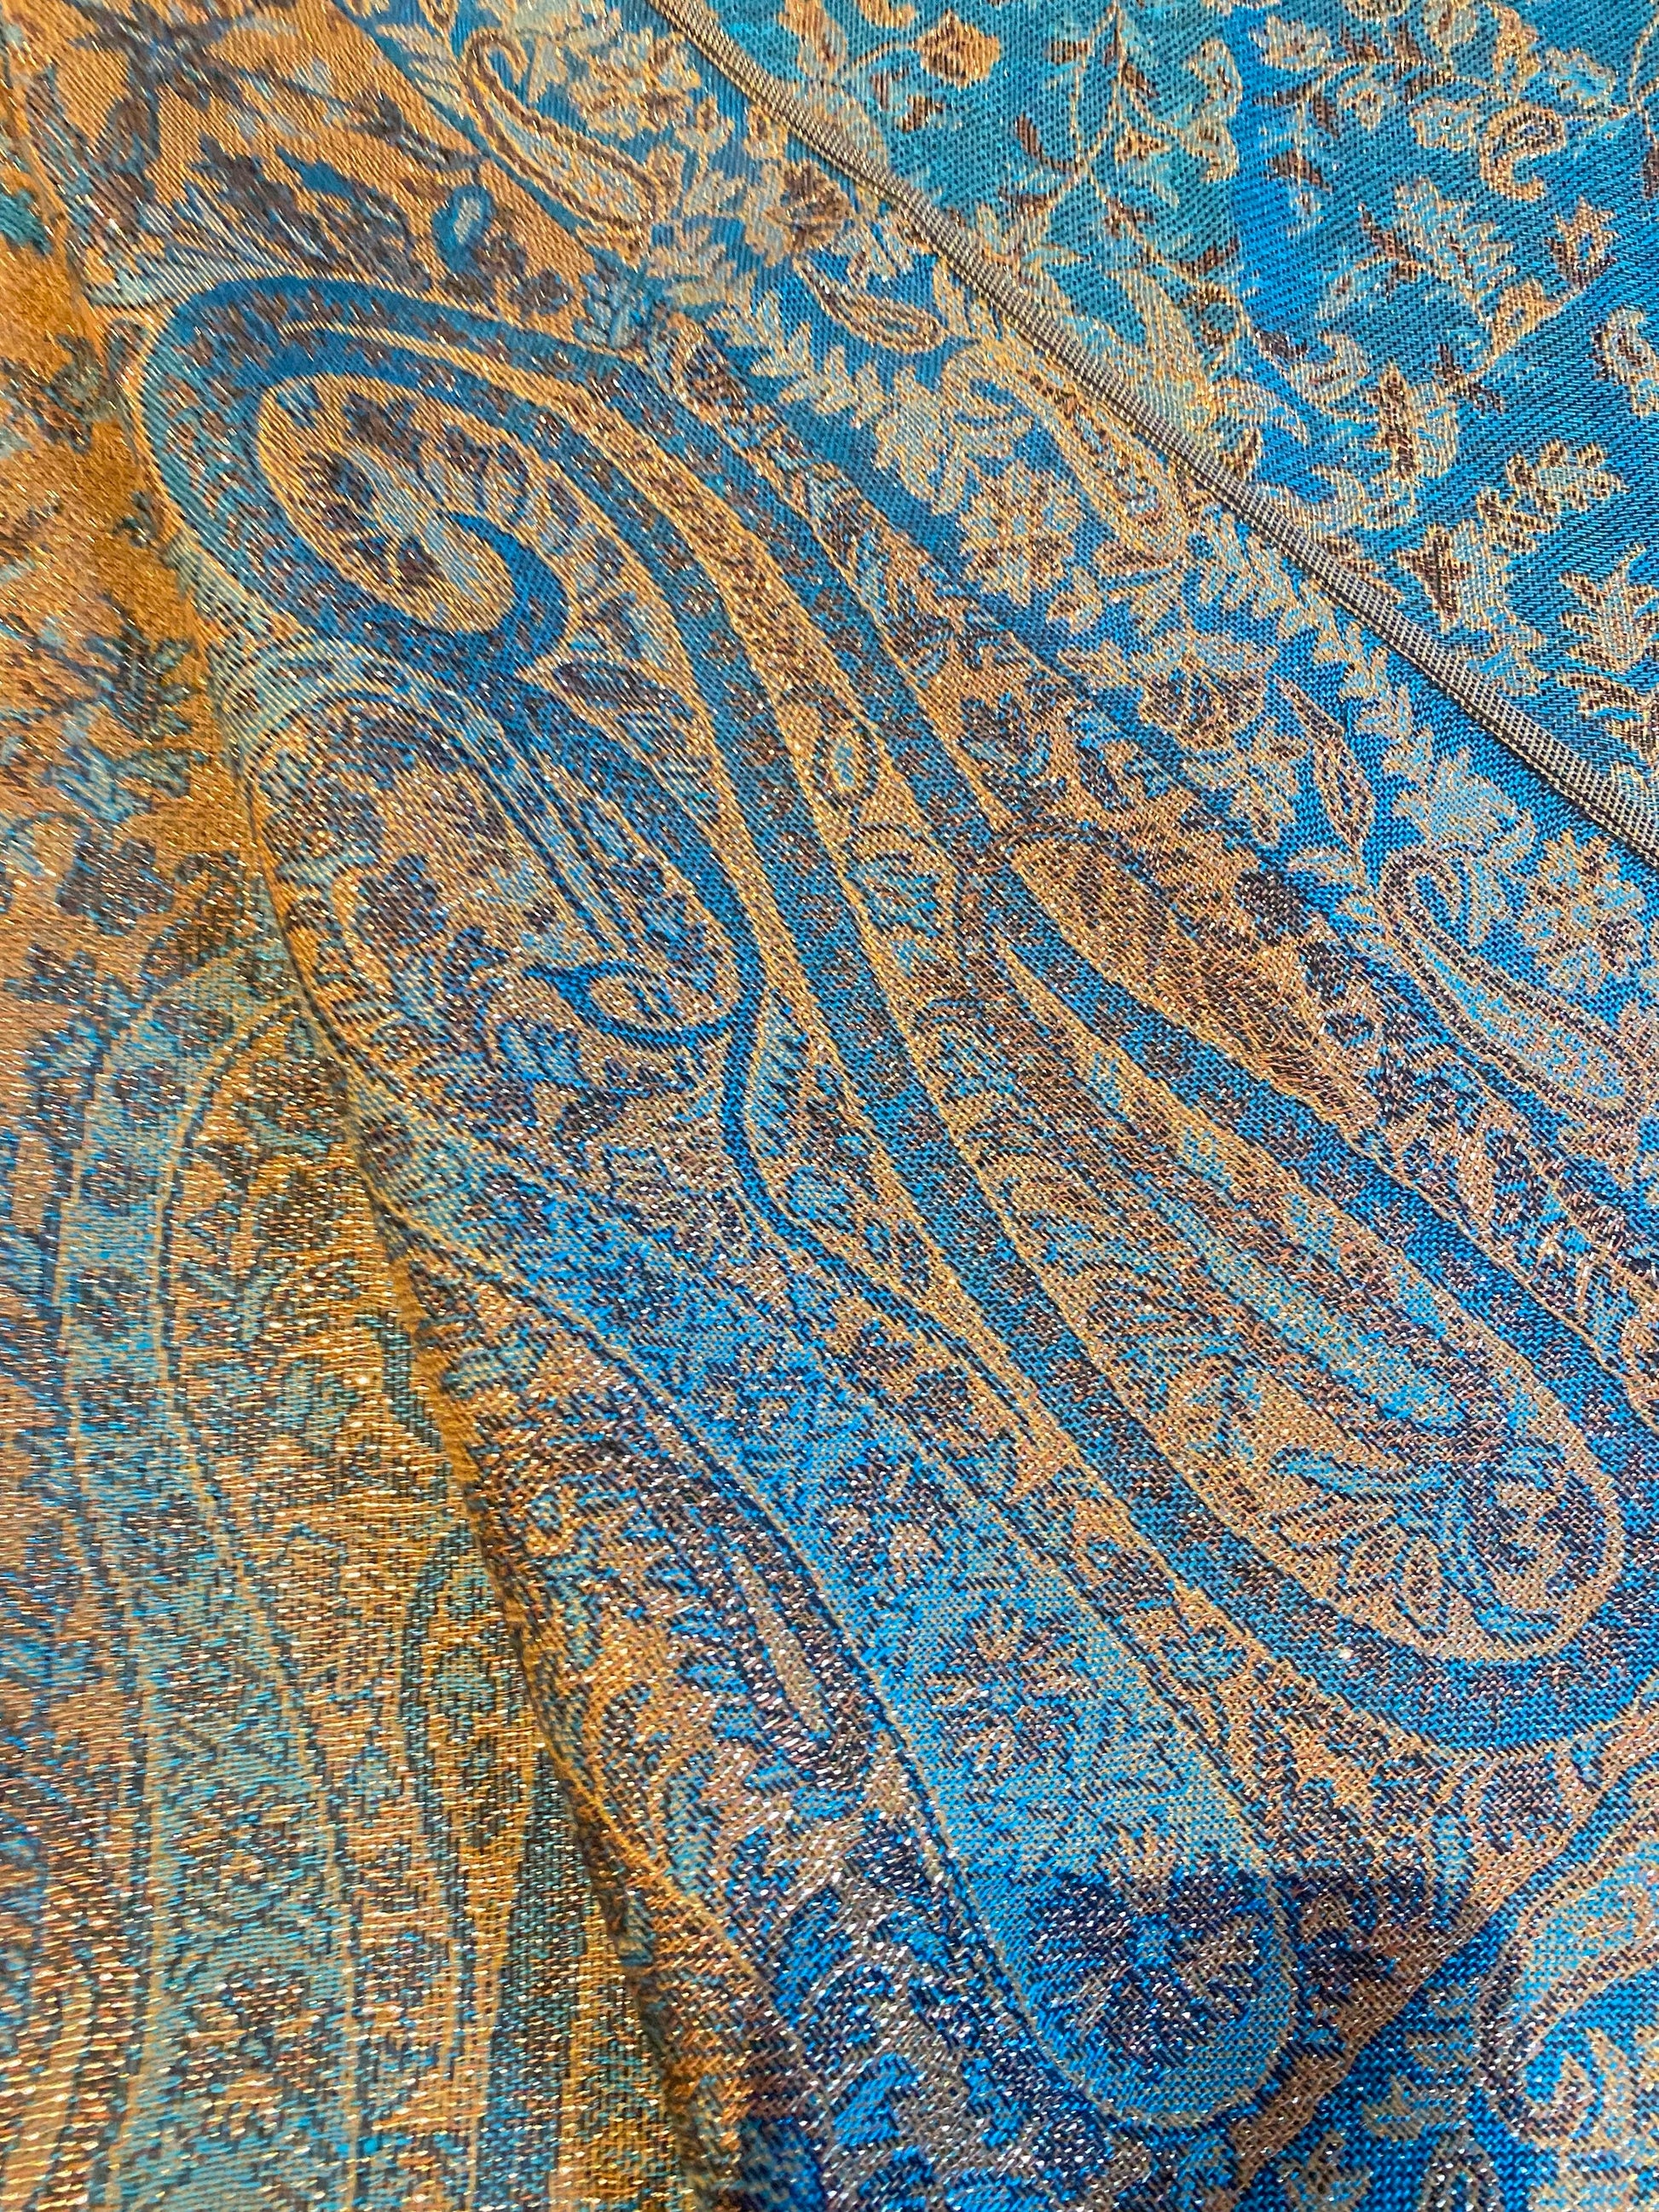 Vintage Blue Gold Paisley Brocade Pashmina Scarf Wrap Shawl